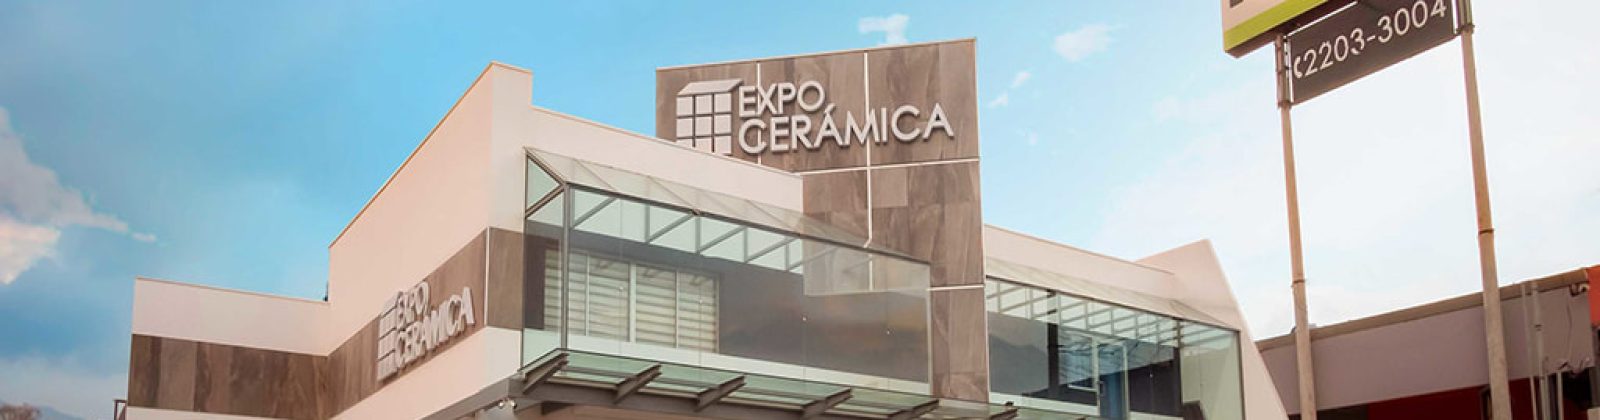 Expo Fachada - Expoceramica